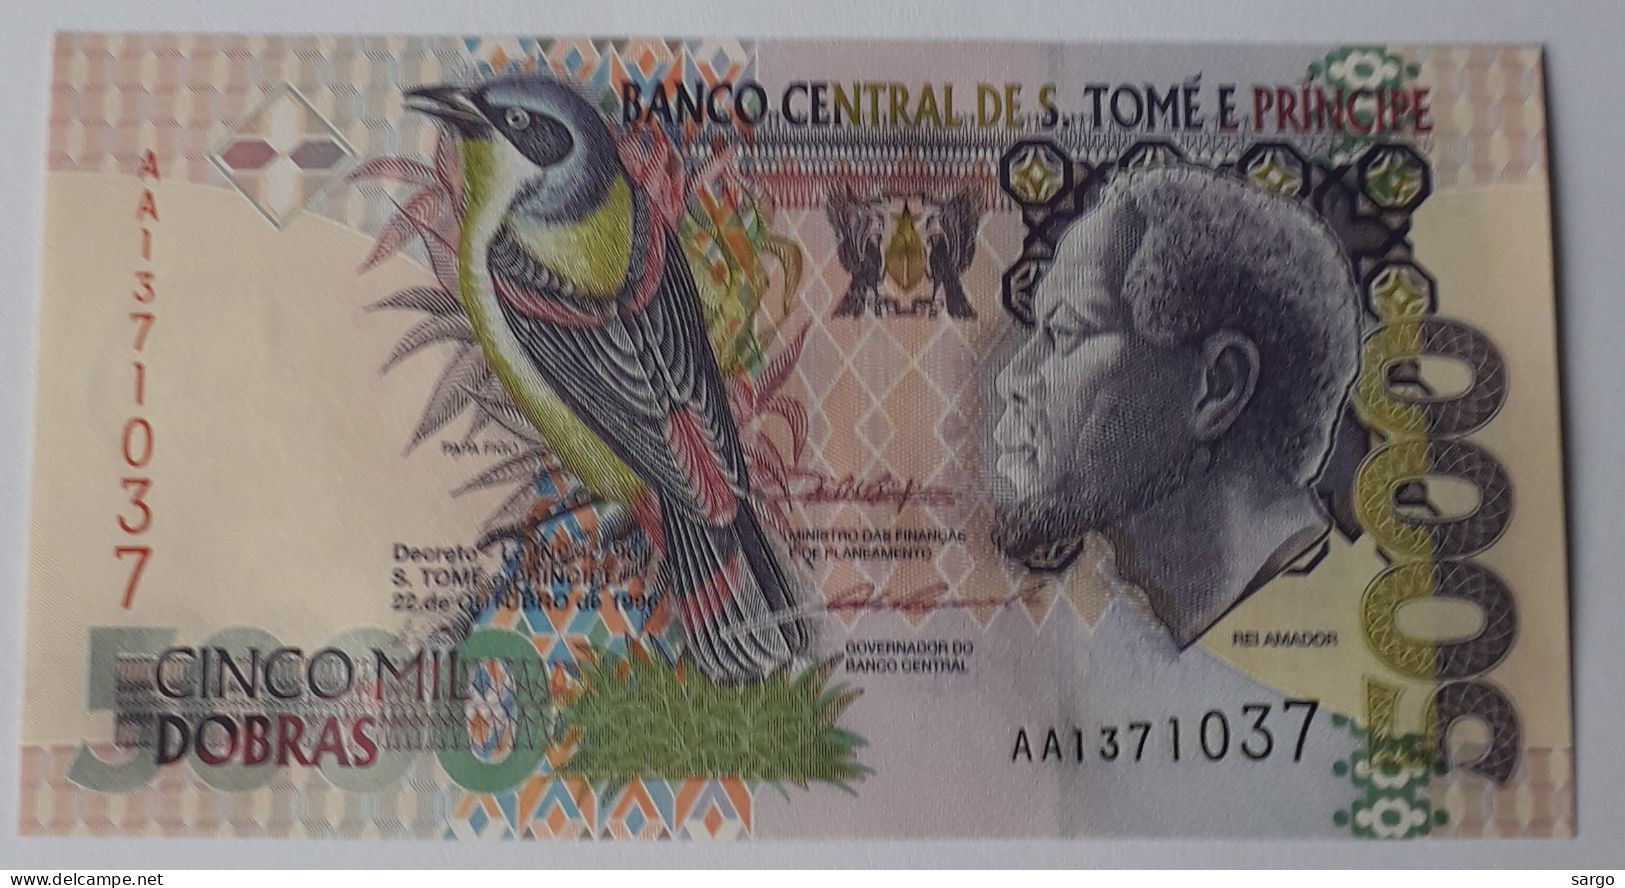 SAINT THOMAS AND PRINCIPE  - 5.000 DOLLARS - P 65  (1996) - UNC -  BANKNOTES - PAPER MONEY - San Tomé Y Príncipe